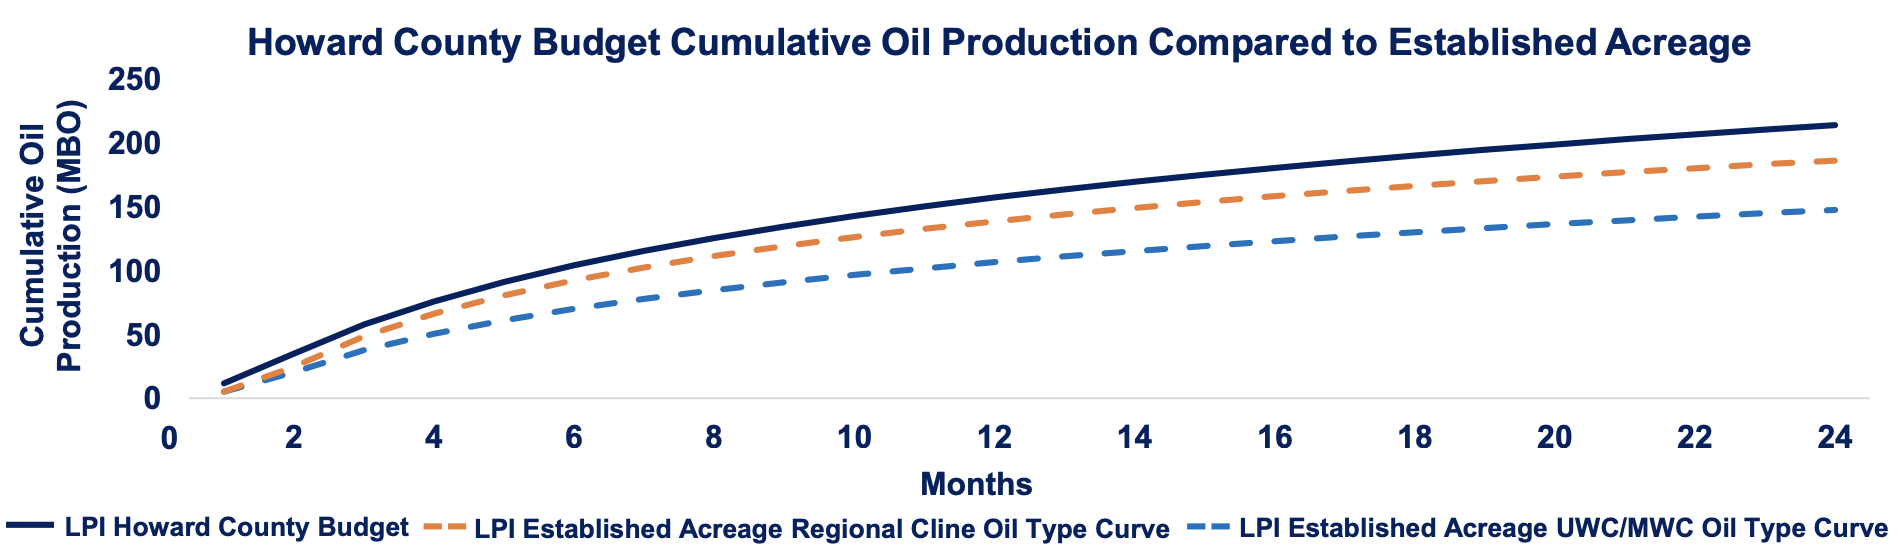 Laredo Petroleum Howard County Budget Cumulative Oil Production Compared to Established Acreage (Source: Laredo Petroleum Inc.)